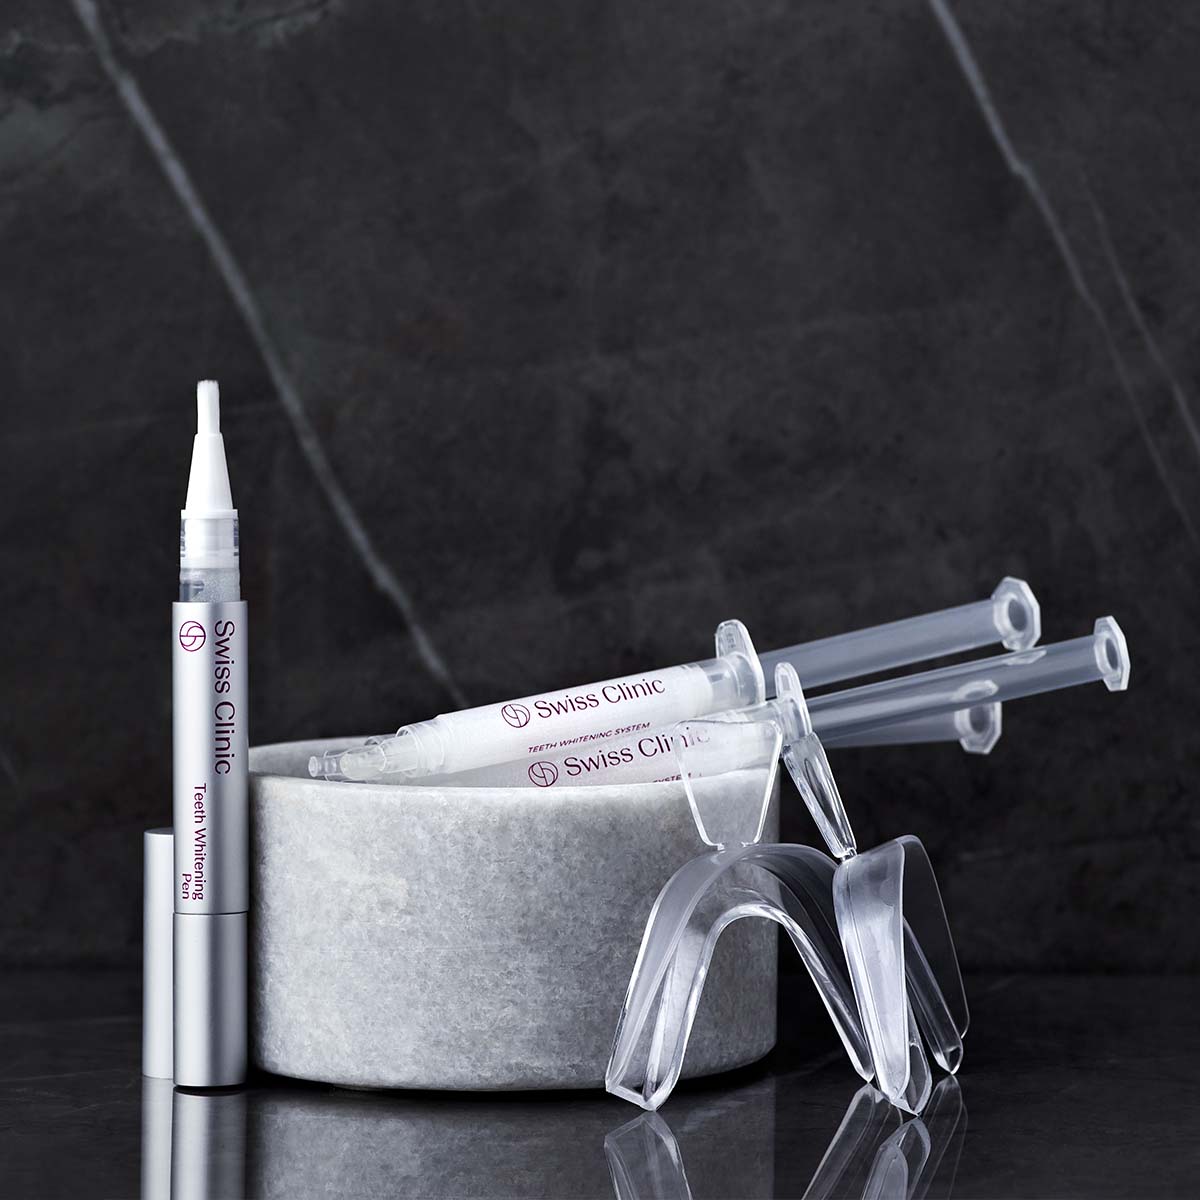 Total Whitening System med Whitening System och Teeth Whitening Pen mot en svart marmorskiva